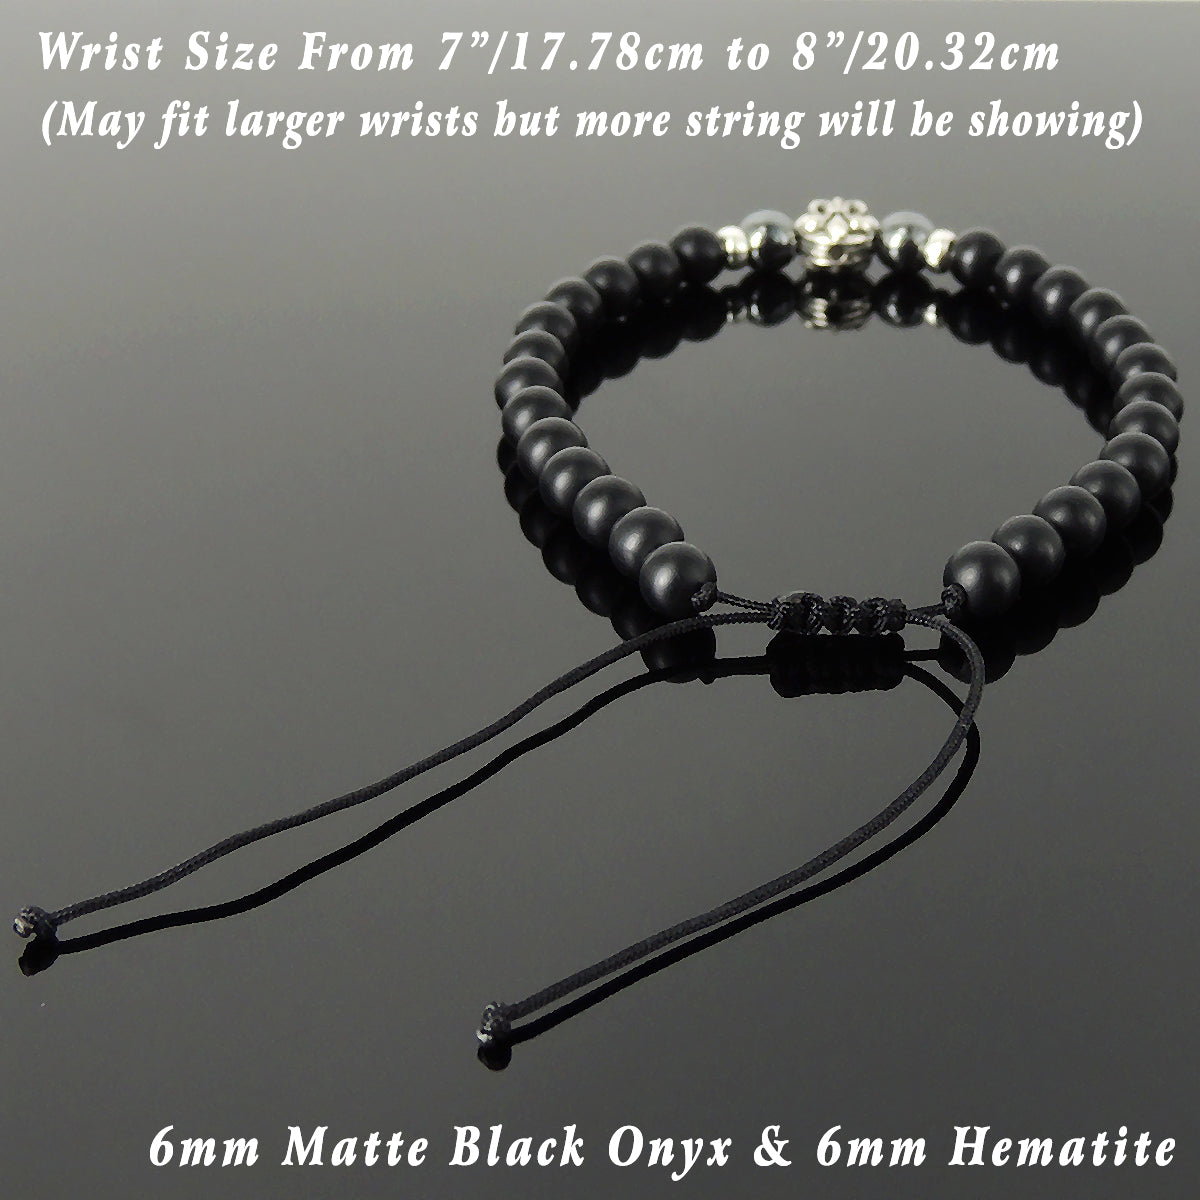 6mm Hematite & Matte Black Onyx Adjustable Braided Bracelet with S925 Sterling Silver Fleur de Lis Bead - Handmade by Gem & Silver BR1335